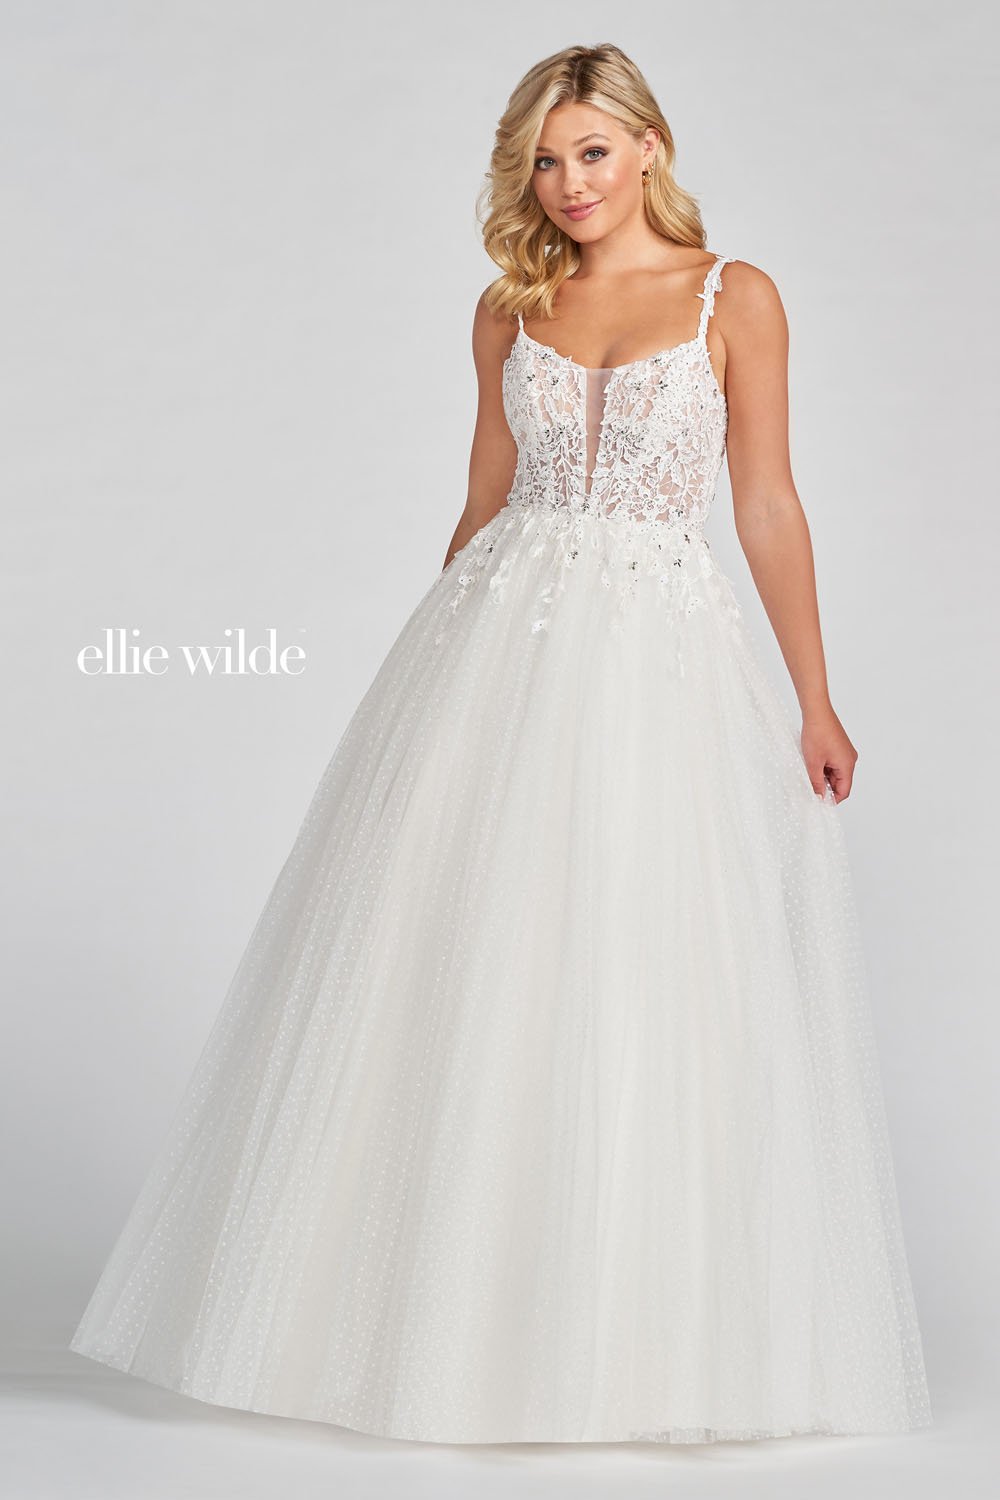 Ellie Wilde Pearl White EW122049 Prom Dress Image.  Pearl White formal dress.